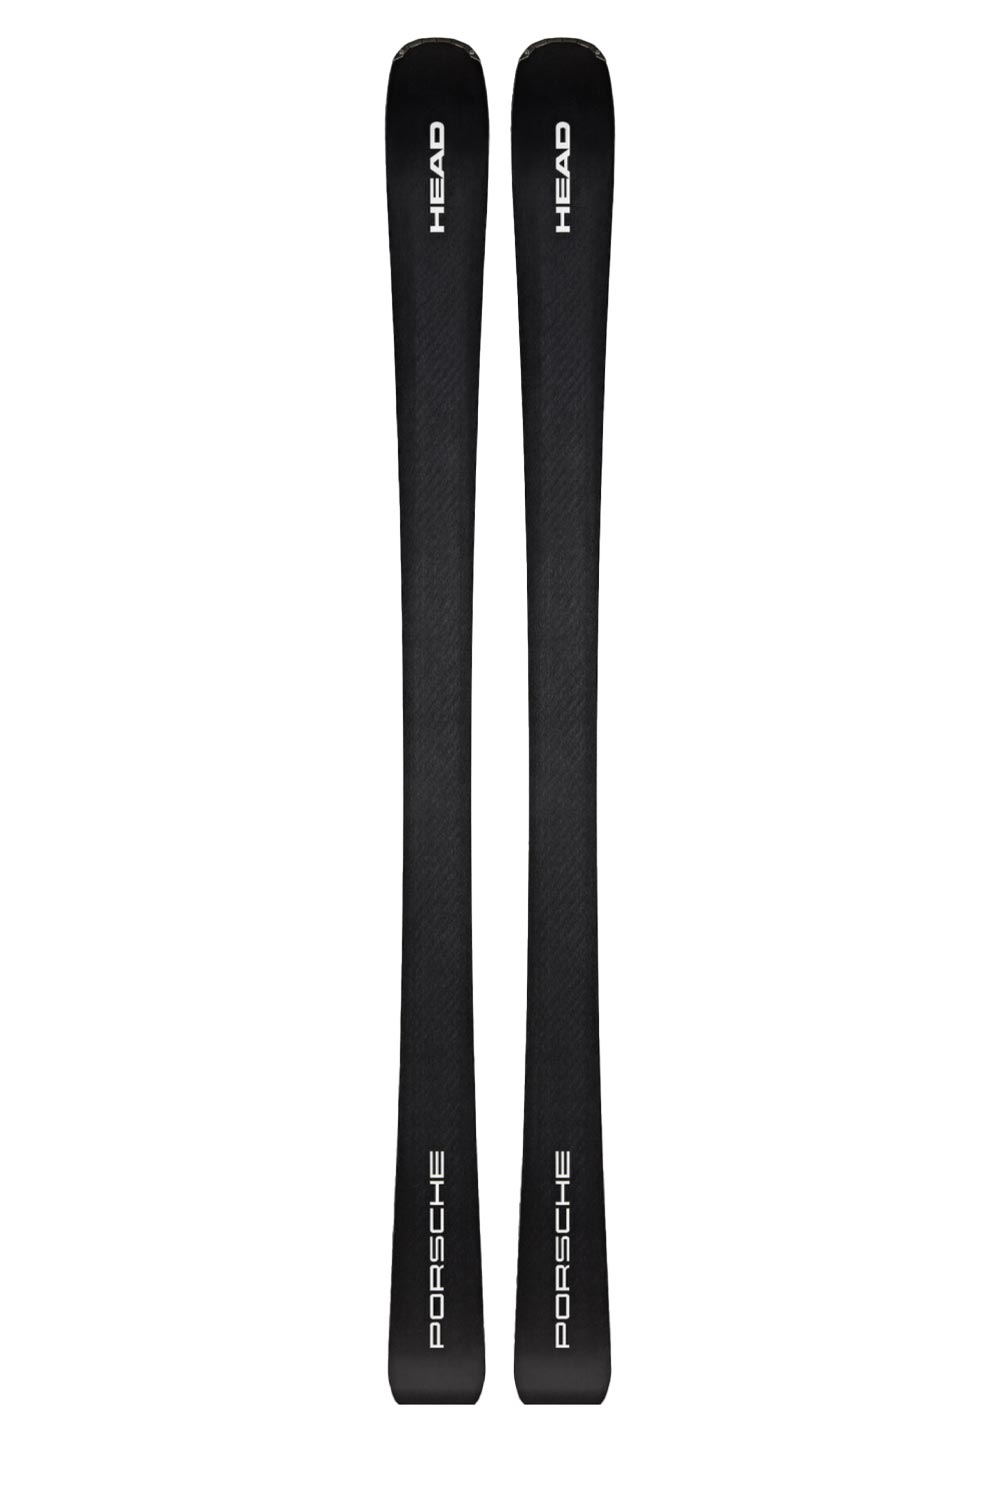 bottom of Head Porsche skis,  black with white writing 